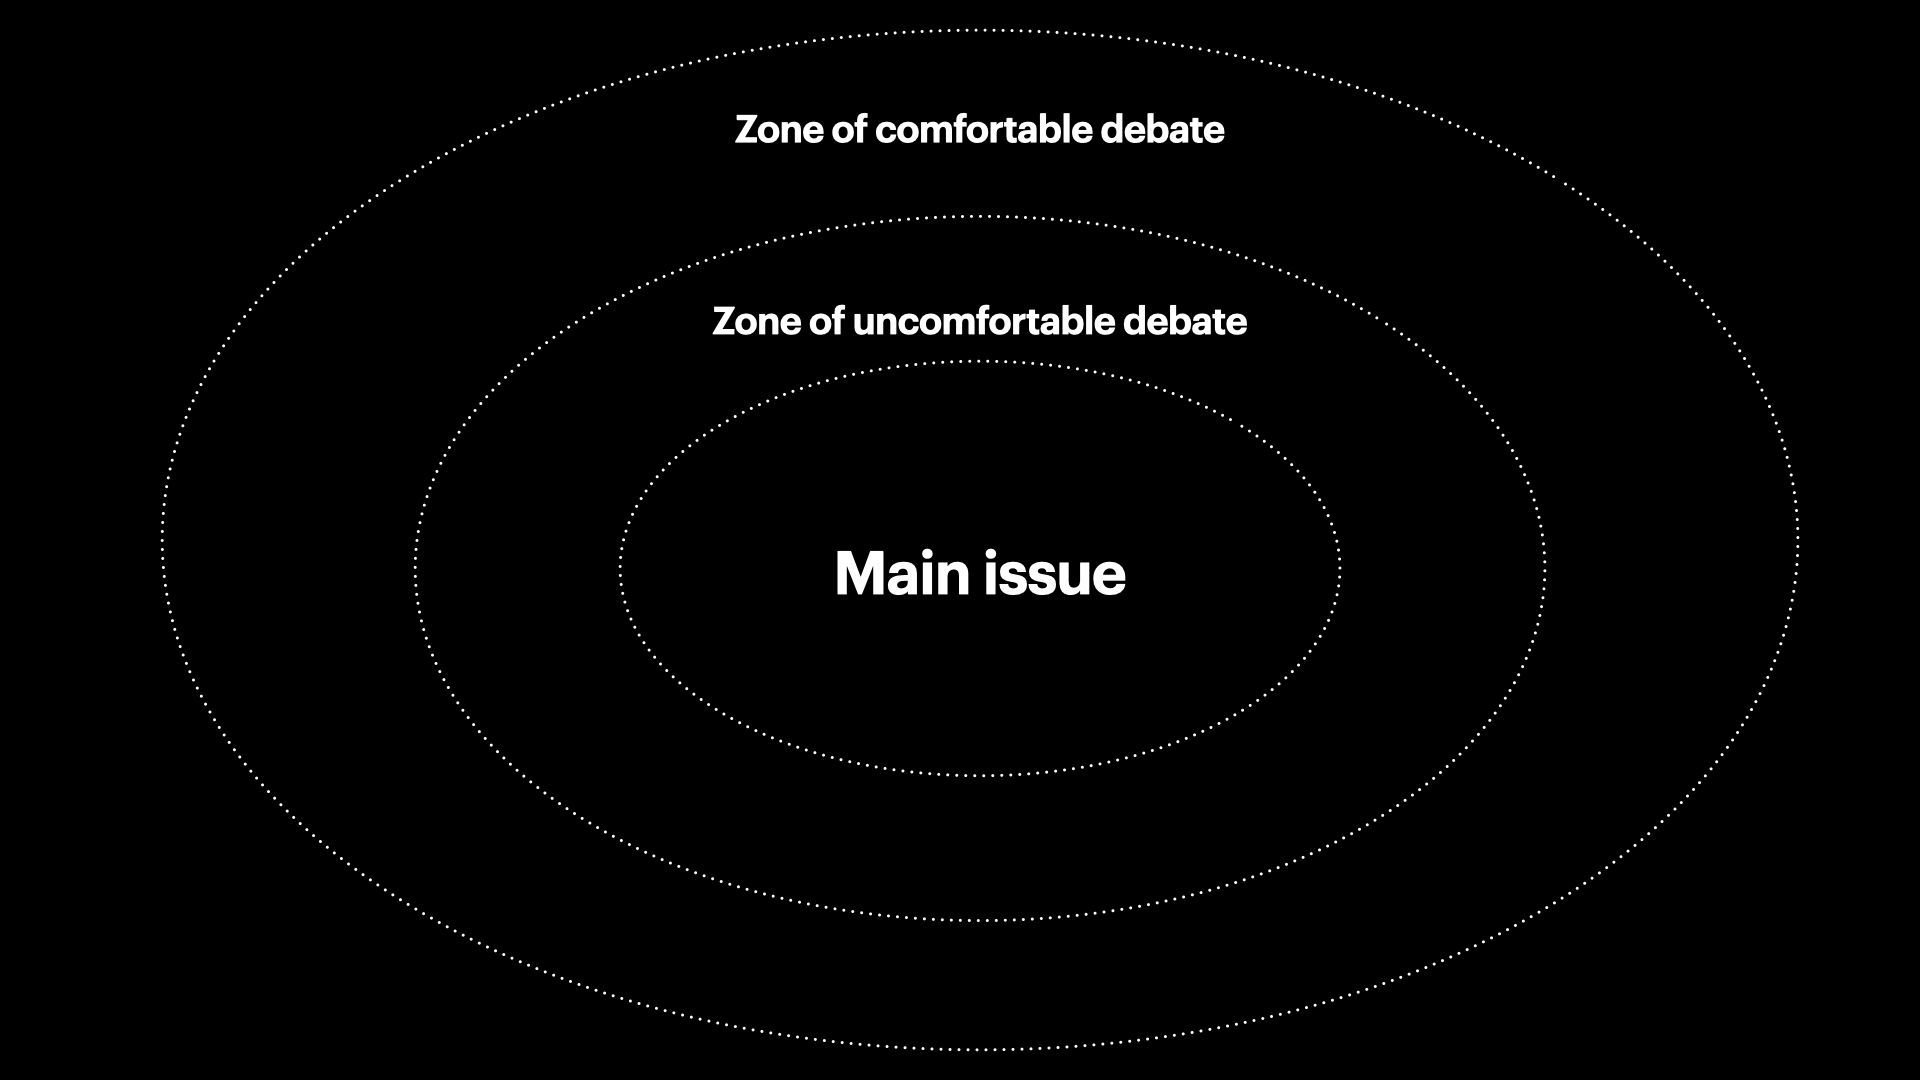 The Zone of uncomfortable debate